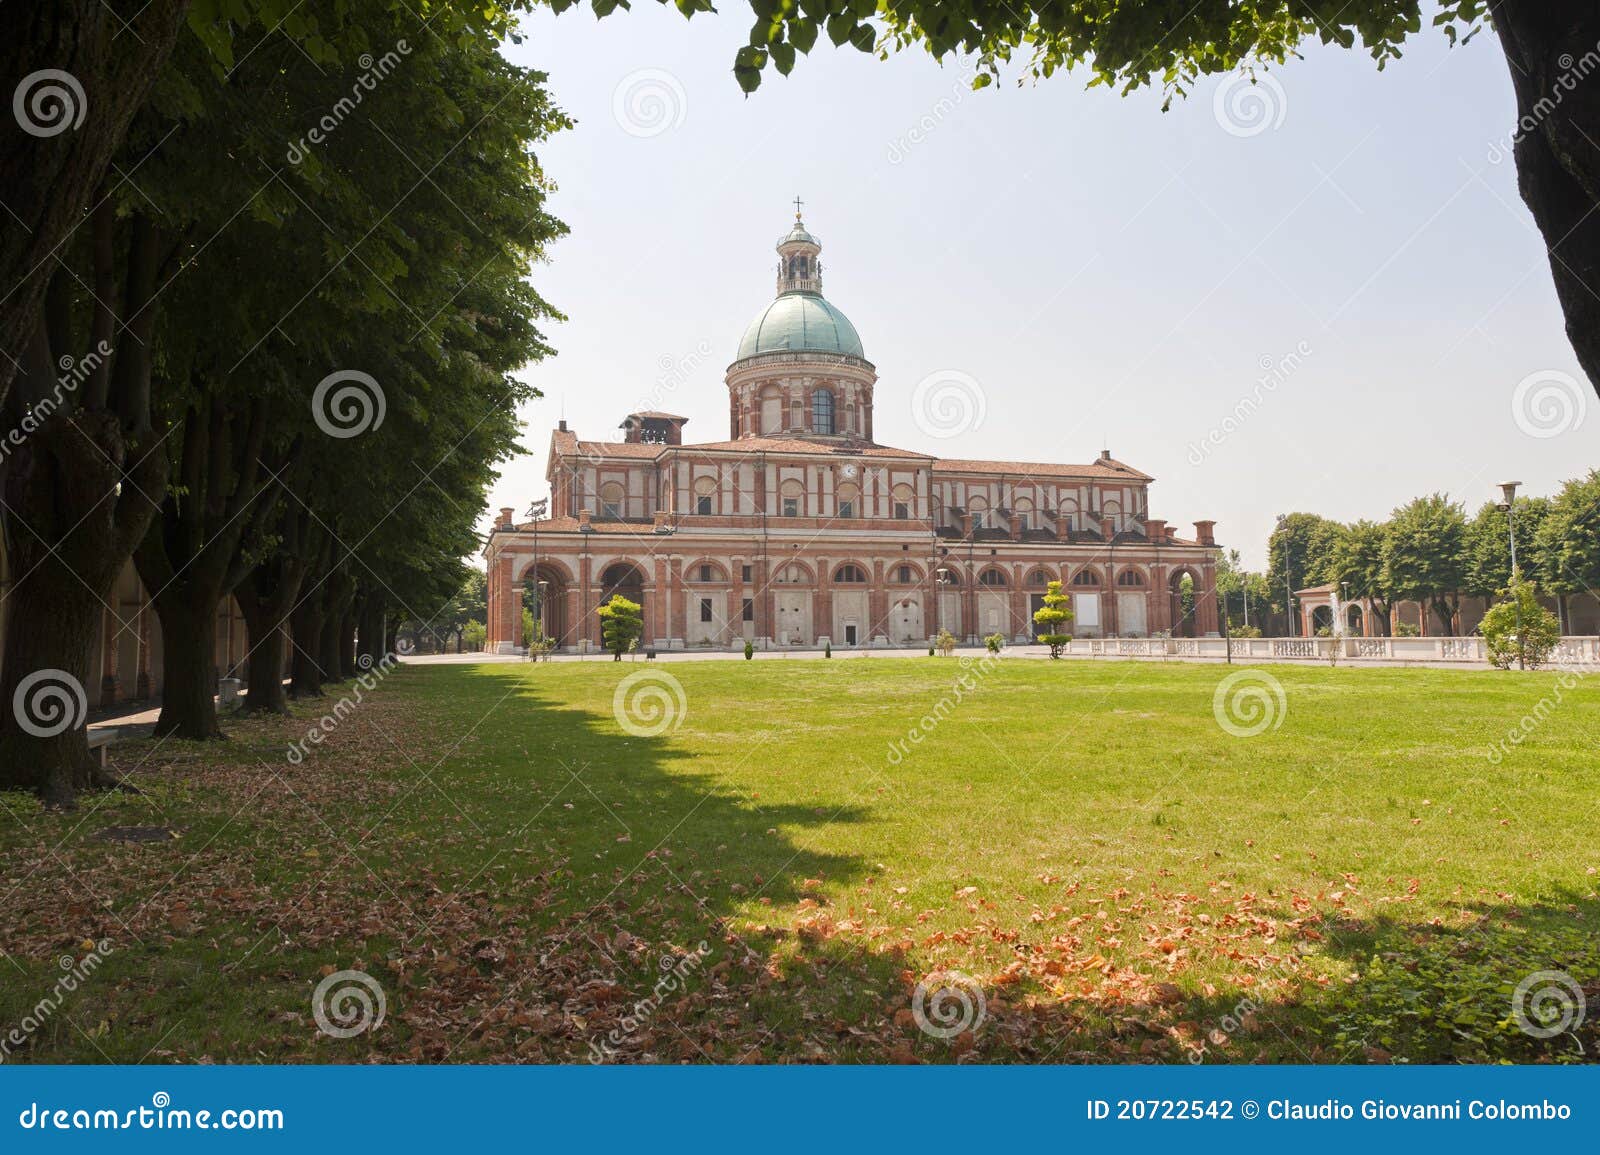 sanctuary of caravaggio, church and park